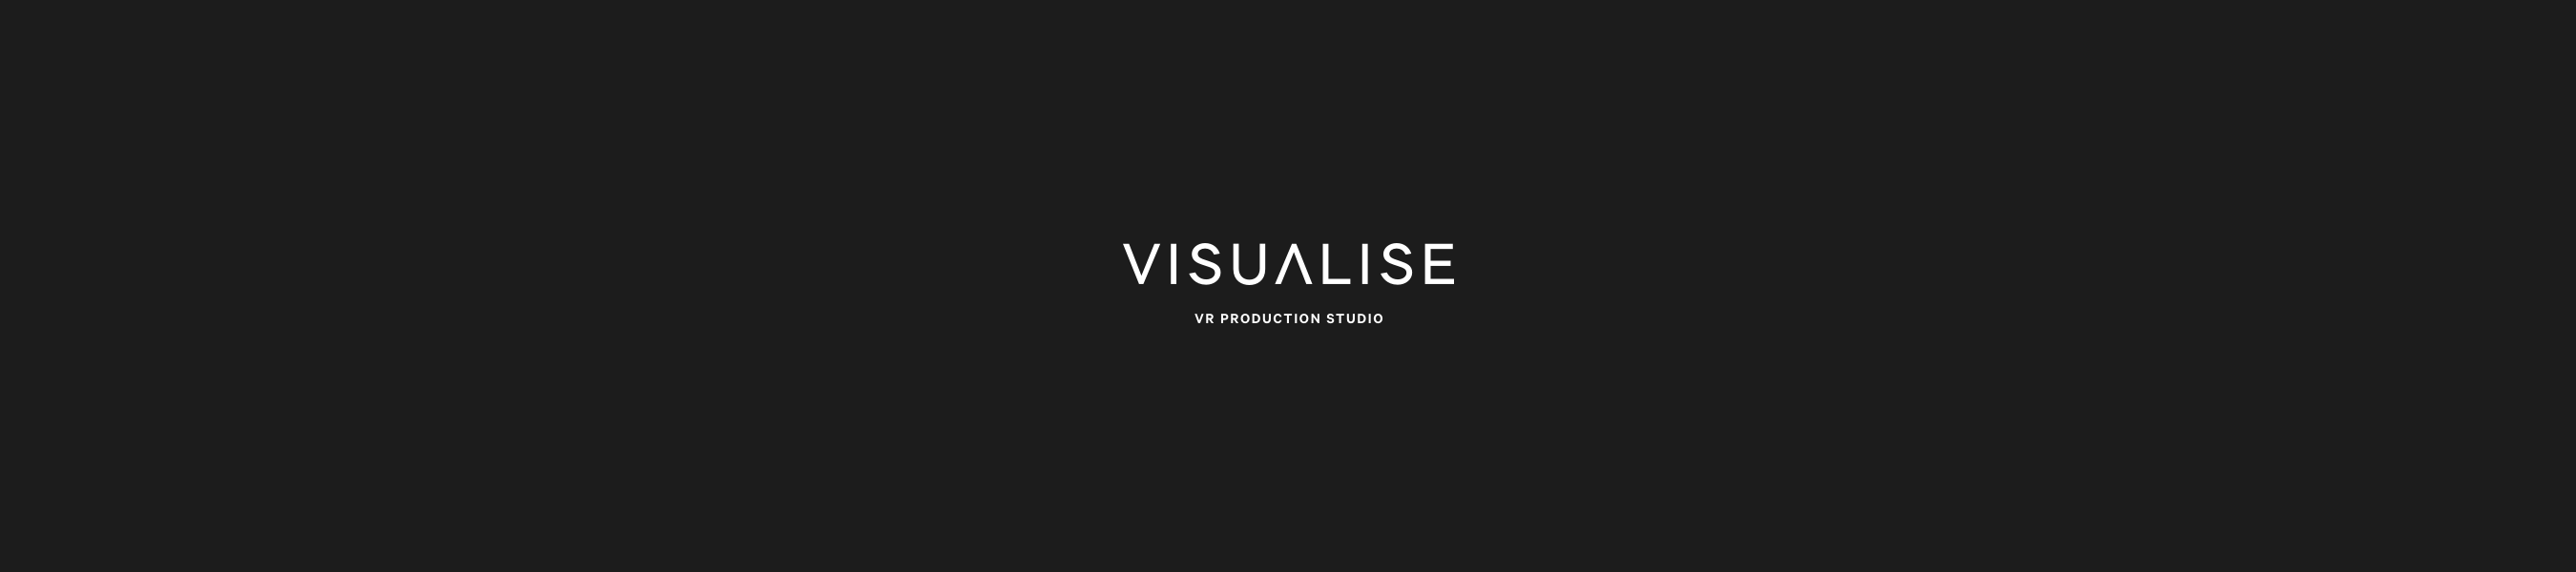 Visualise-Banner-2